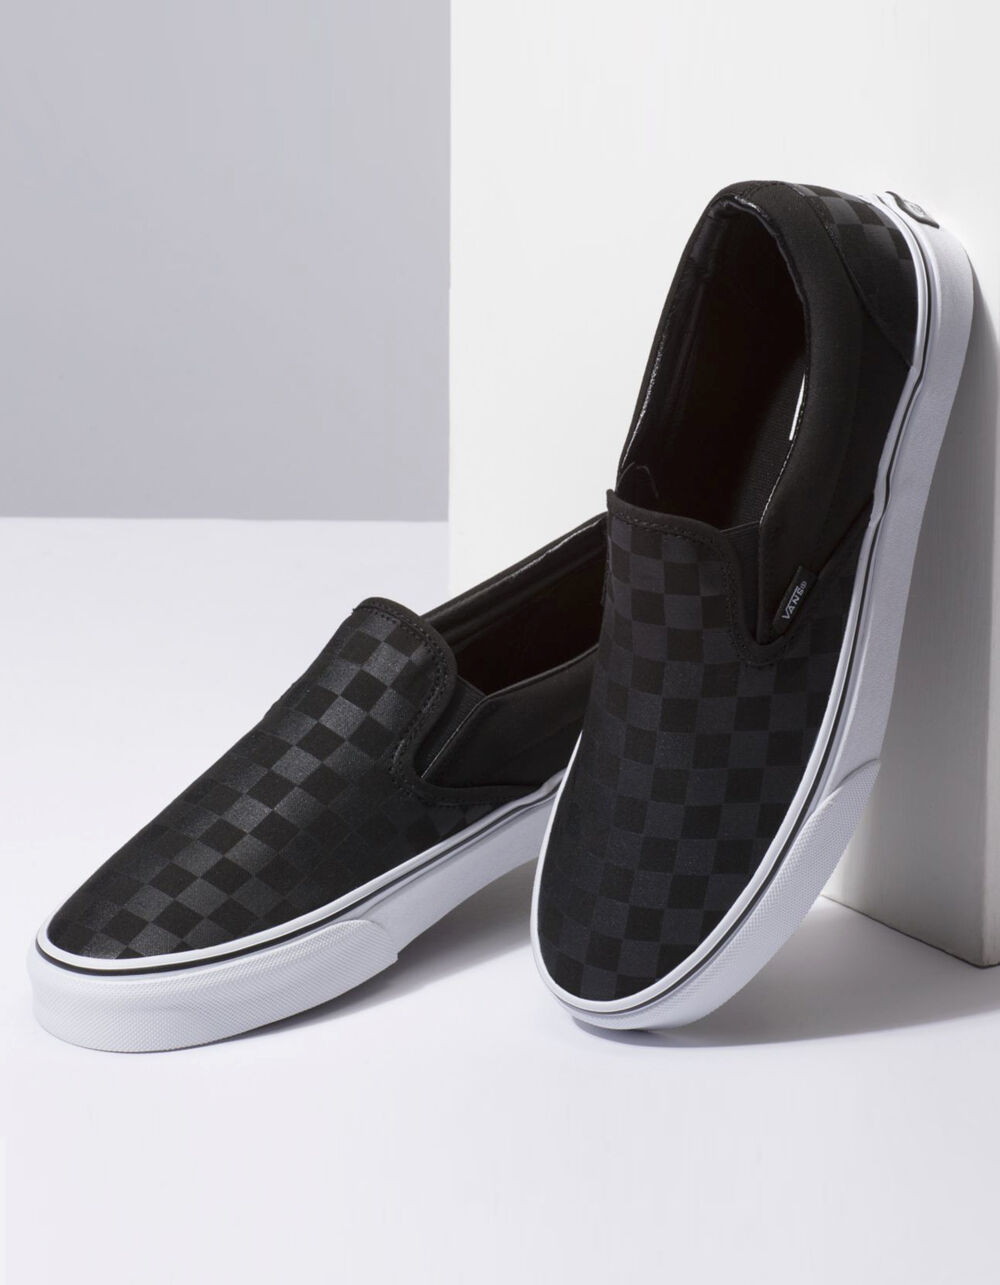 VANS Checkerboard Slip-On Black & Black Shoes - CHECKERBOARD | Tillys